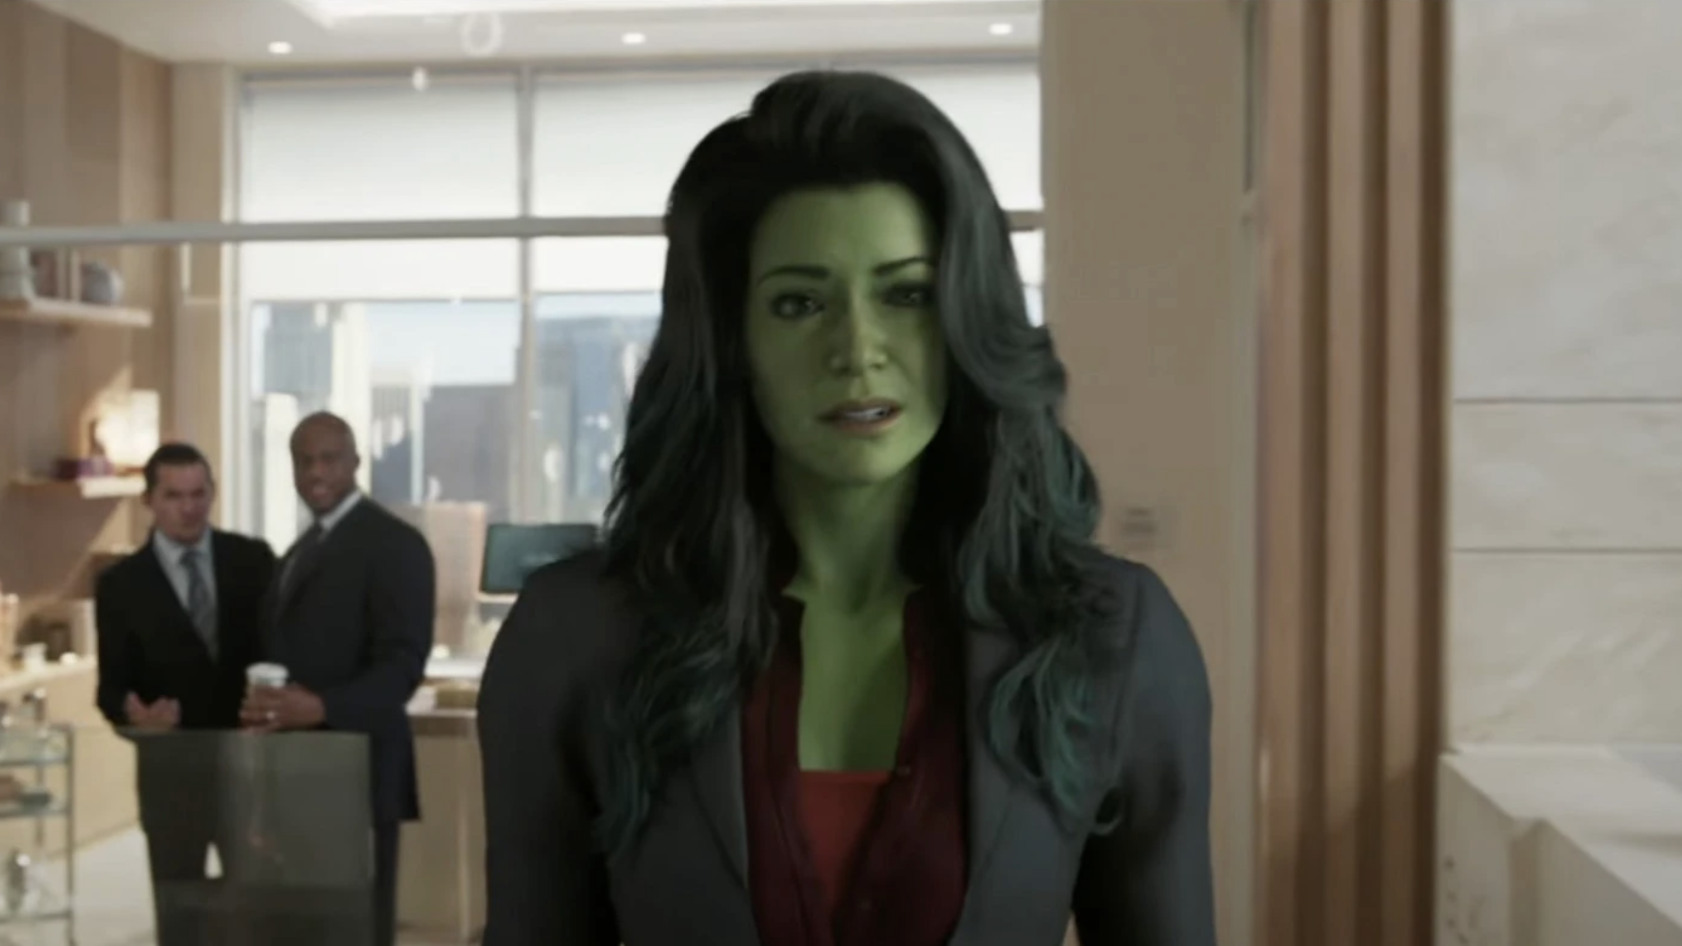 She-Hulk' Season 2: Has the Marvel Show Been Renewed?